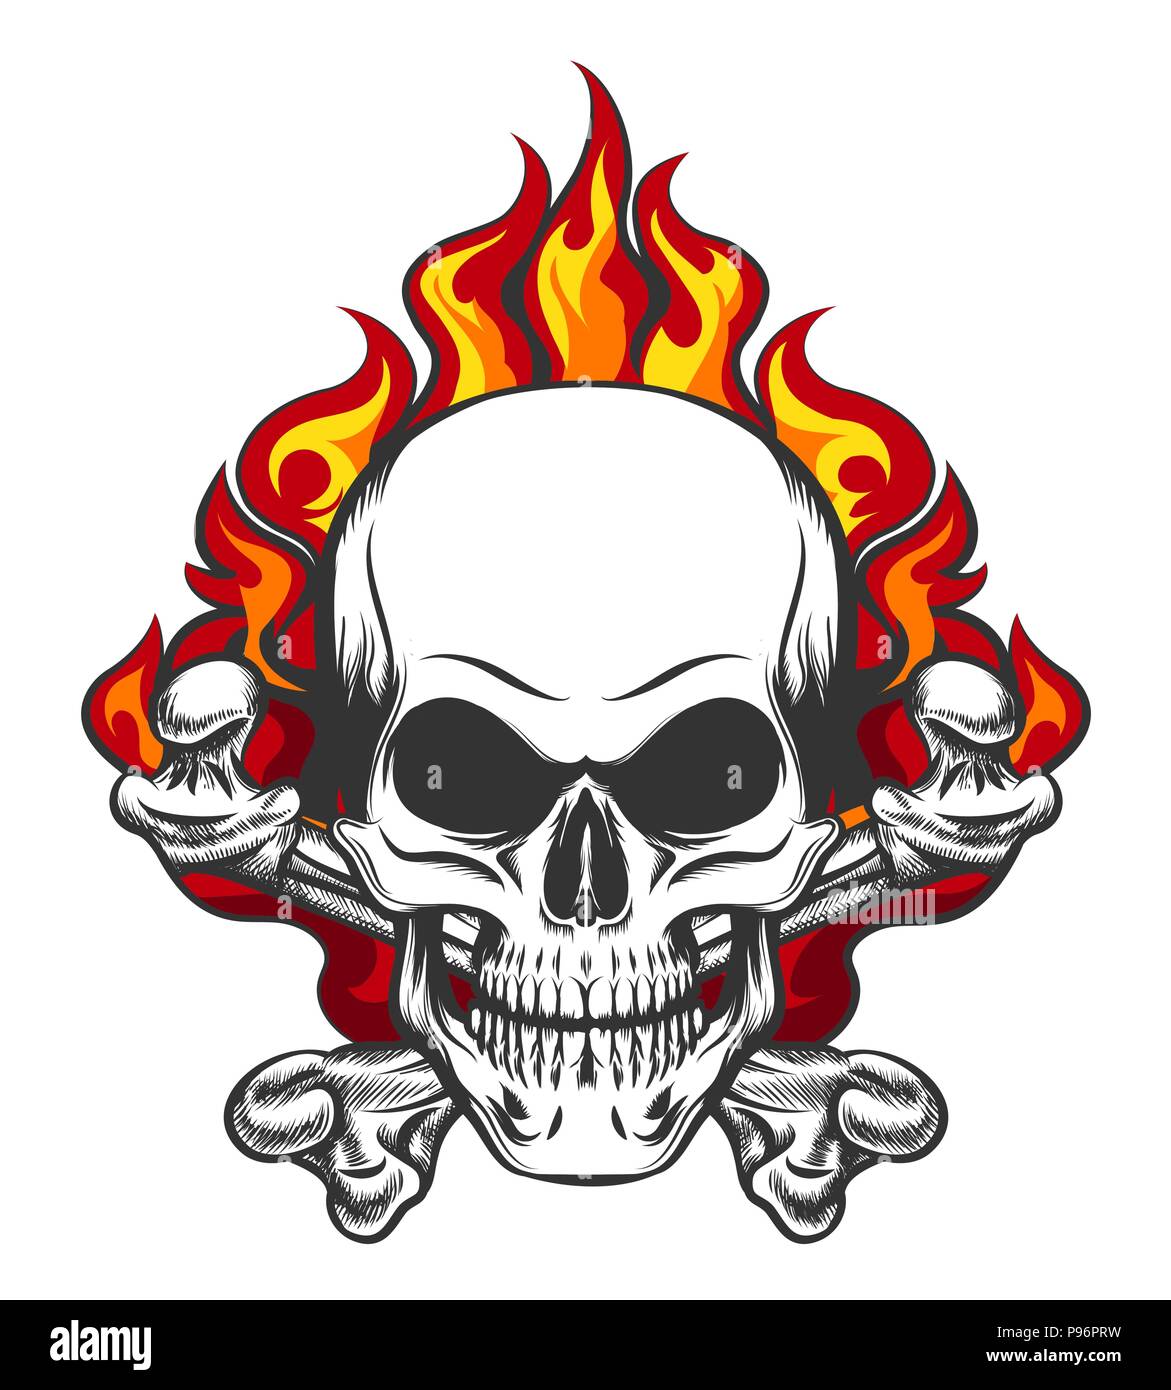 Skull sketch design with flame - stock vector 1631529 | Crushpixel